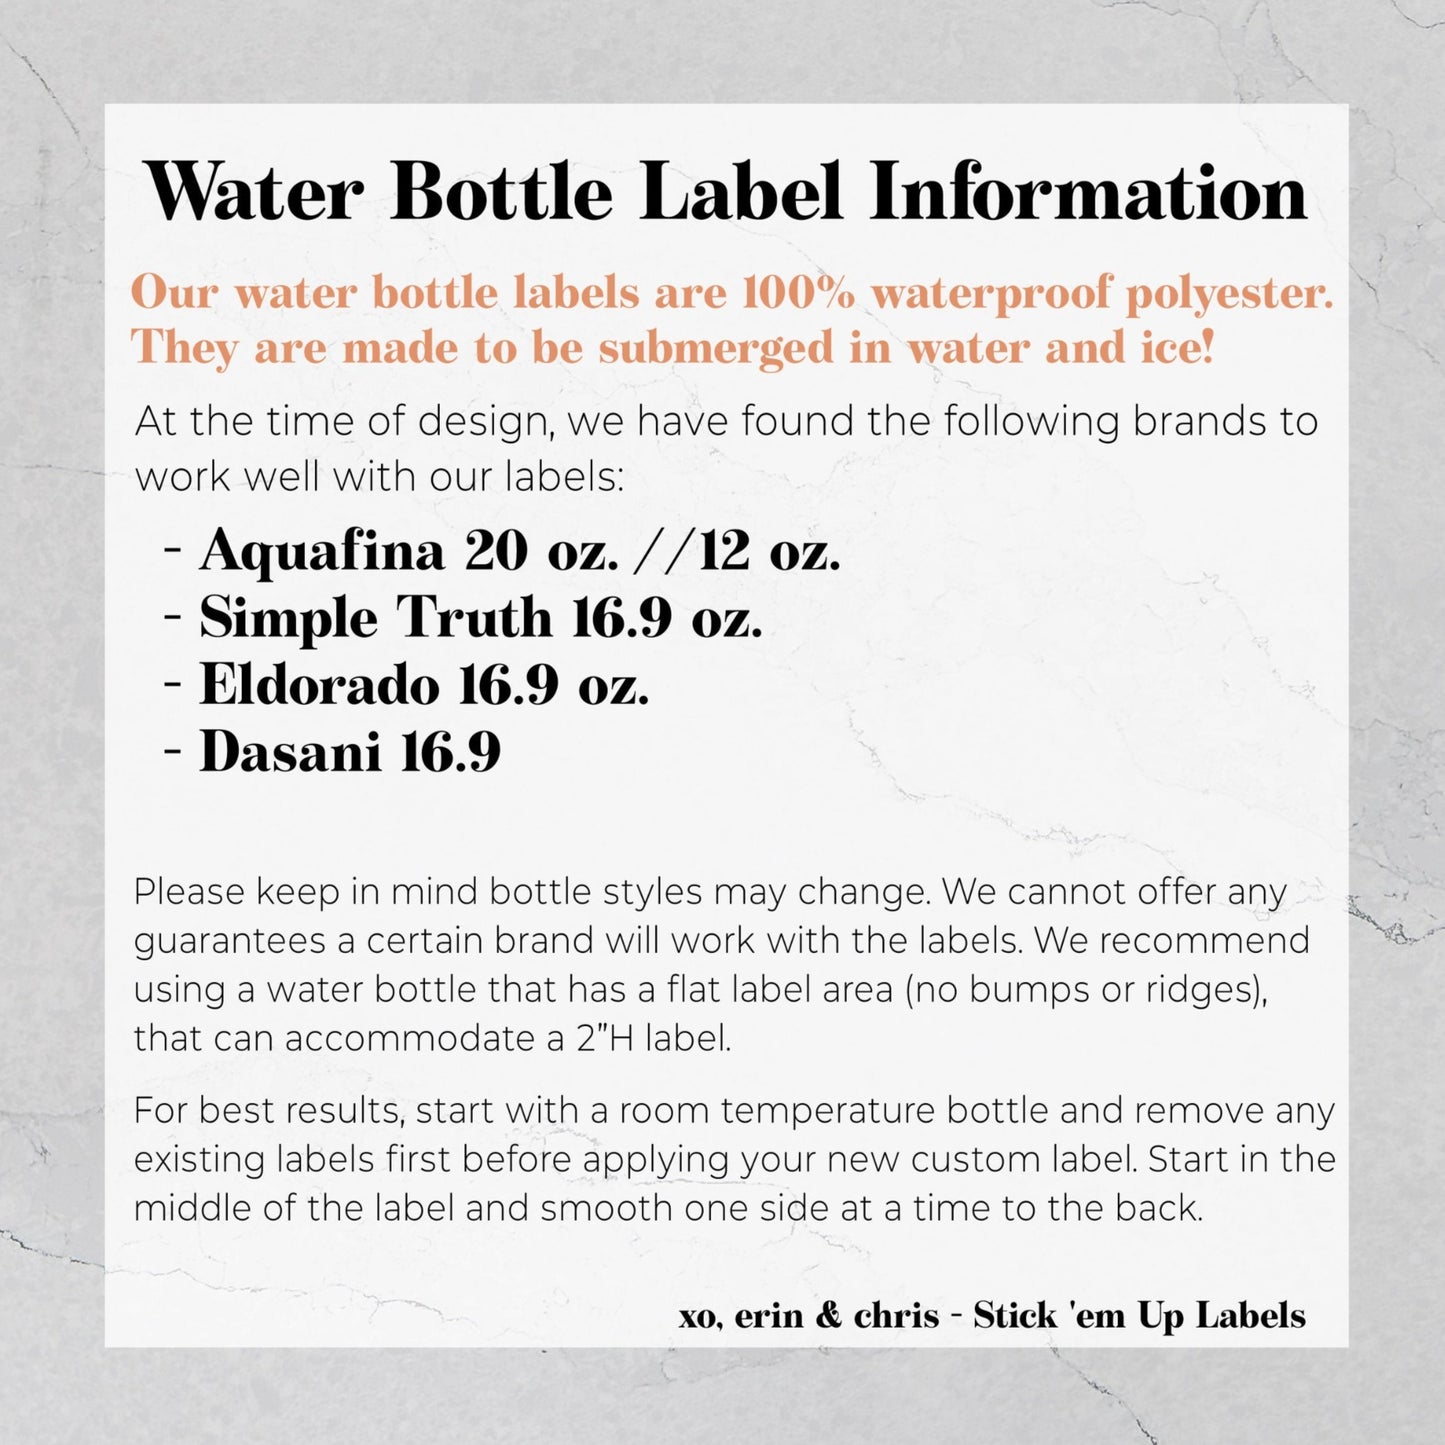 Wedding Water Bottle Label - Thank You Water Bottle Labels, Personalized Waterproof Label, Wedding Welcome Bags, Minimalist Wedding Sticker